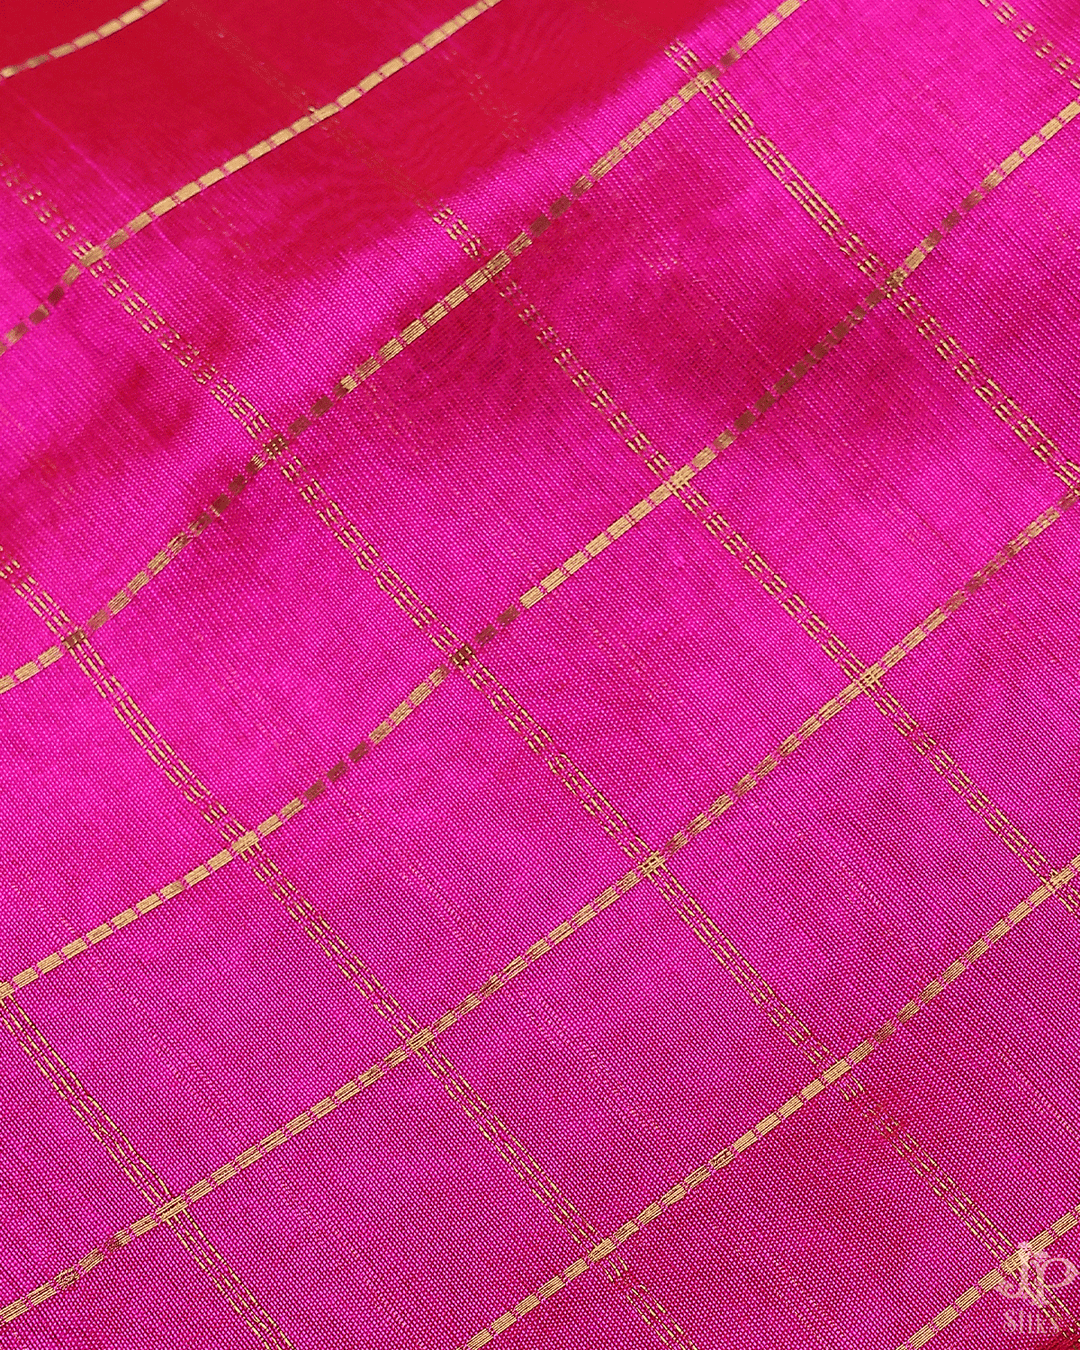 Rani Pink and Navy Blue Silk Cotton Saree - A4956 - View 4